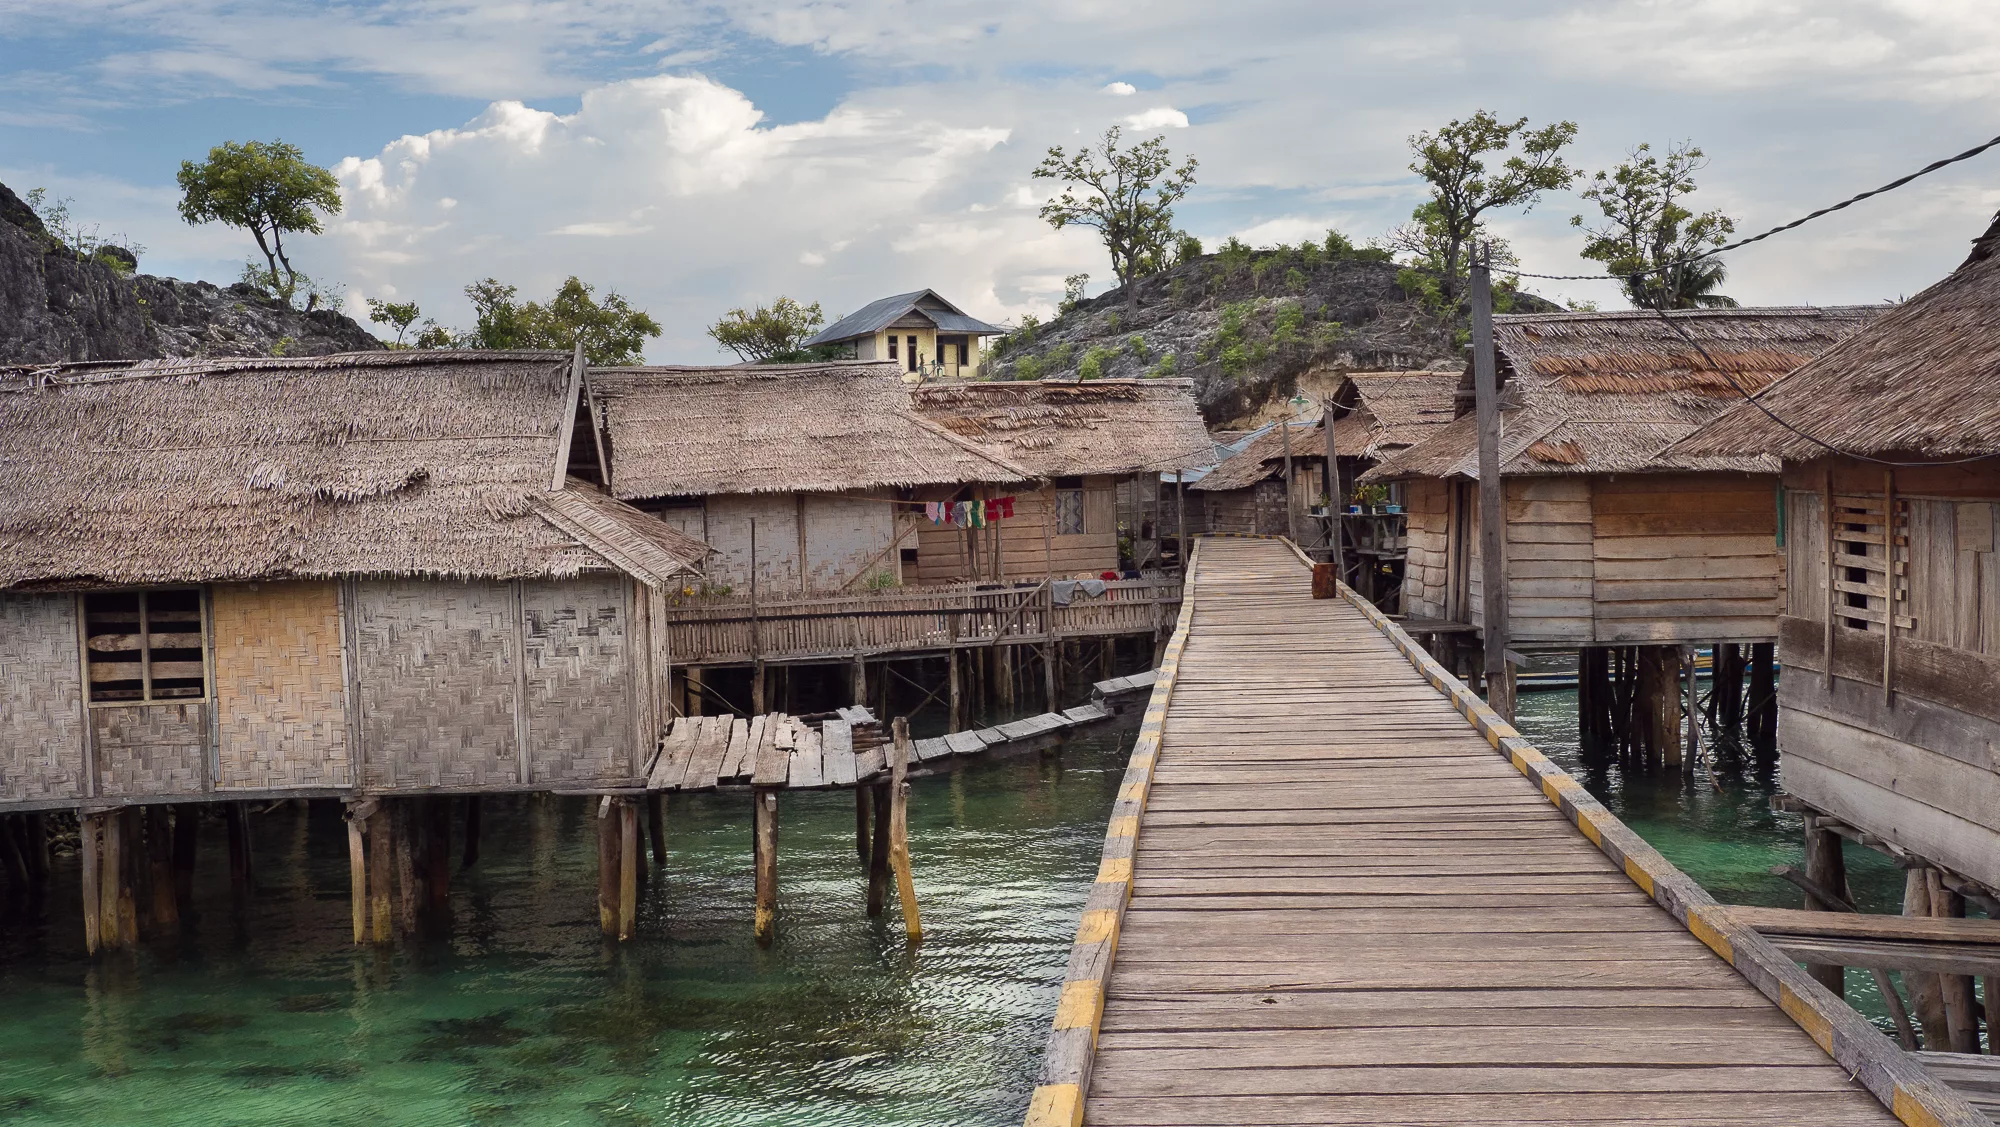 Bajo village (sea gipsy), Indonesia